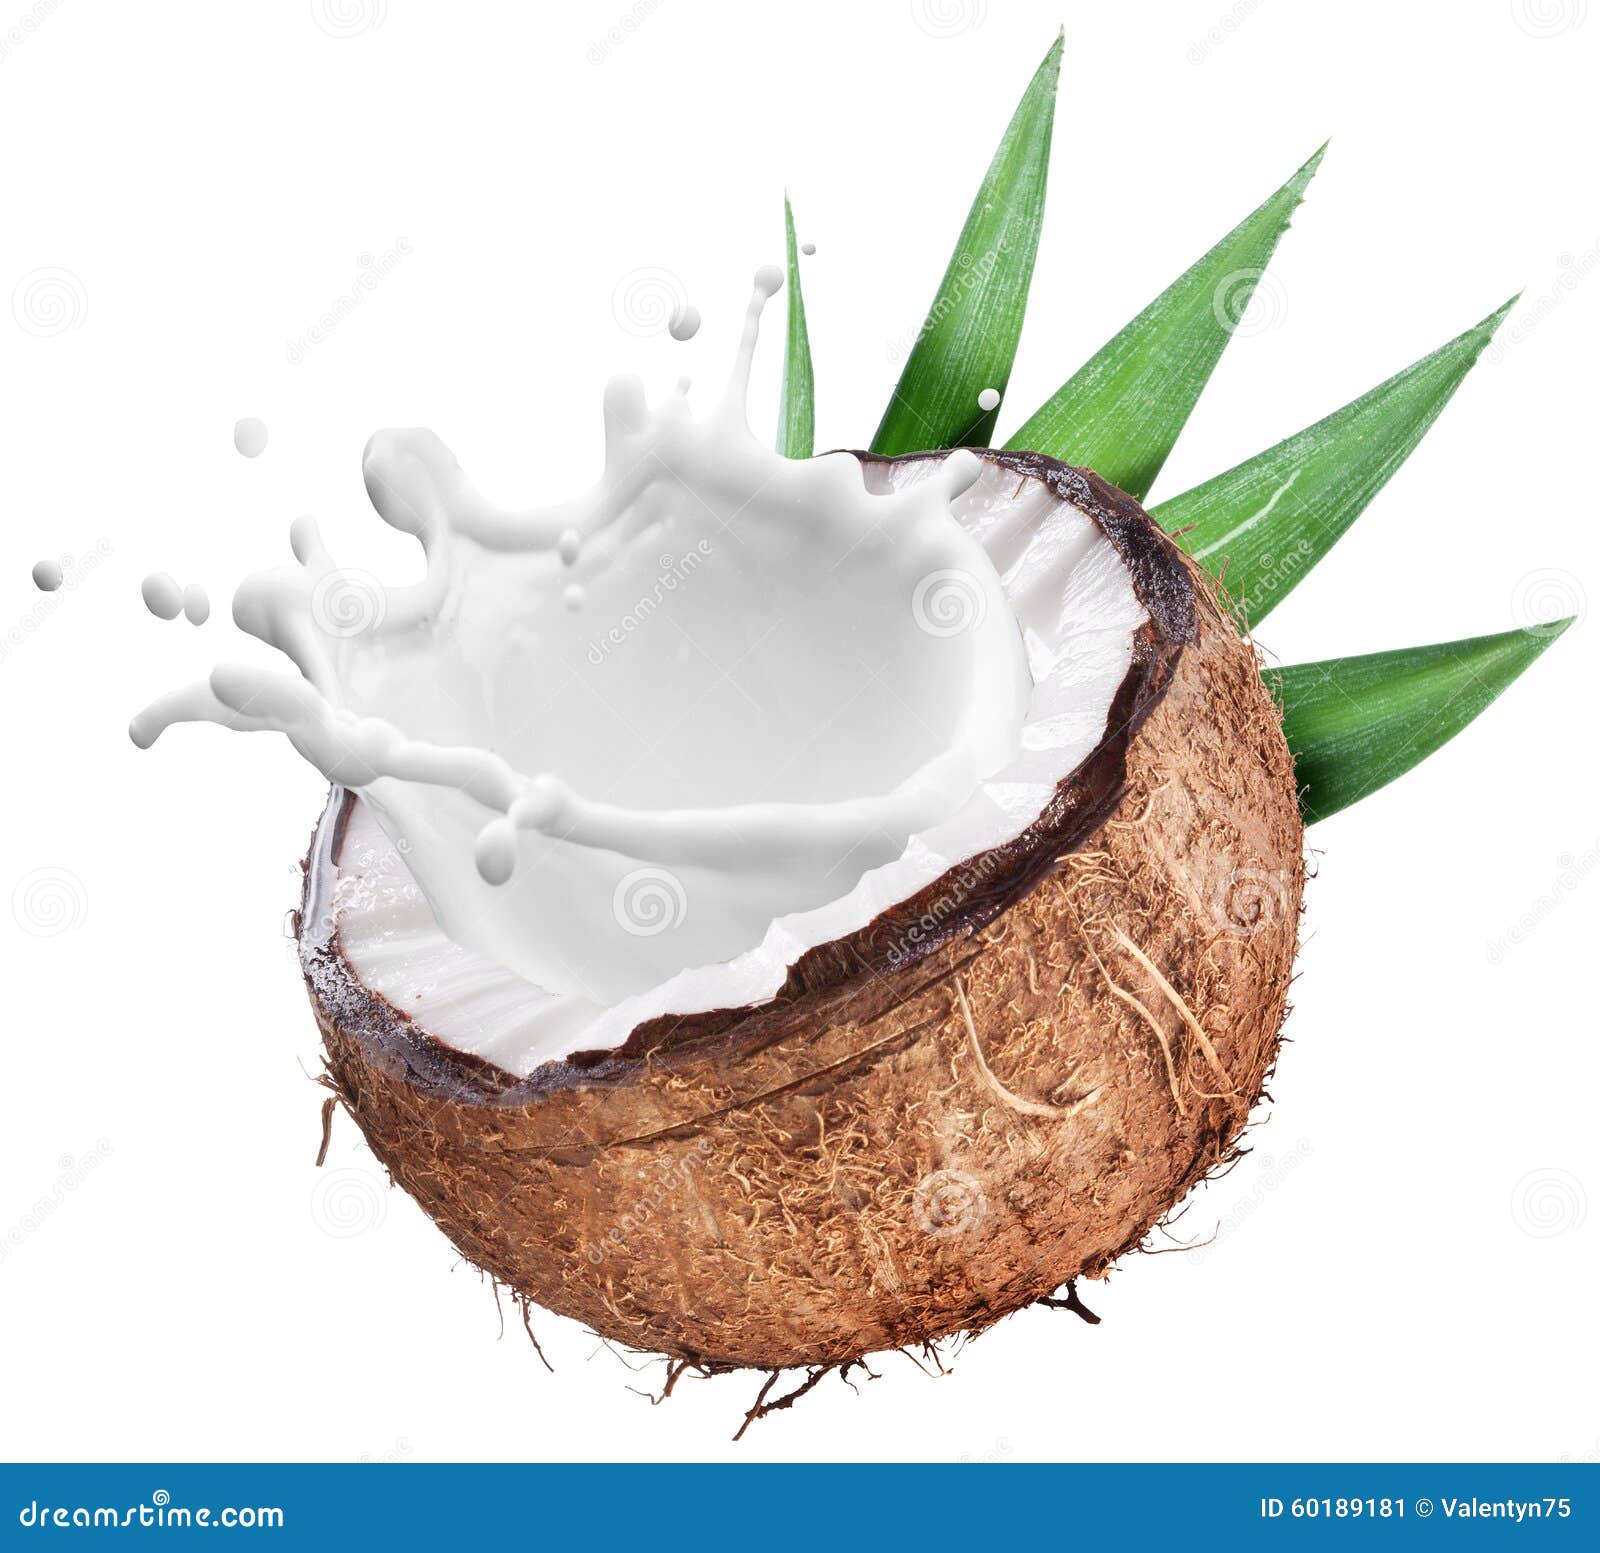 coconut with milk splash inside.